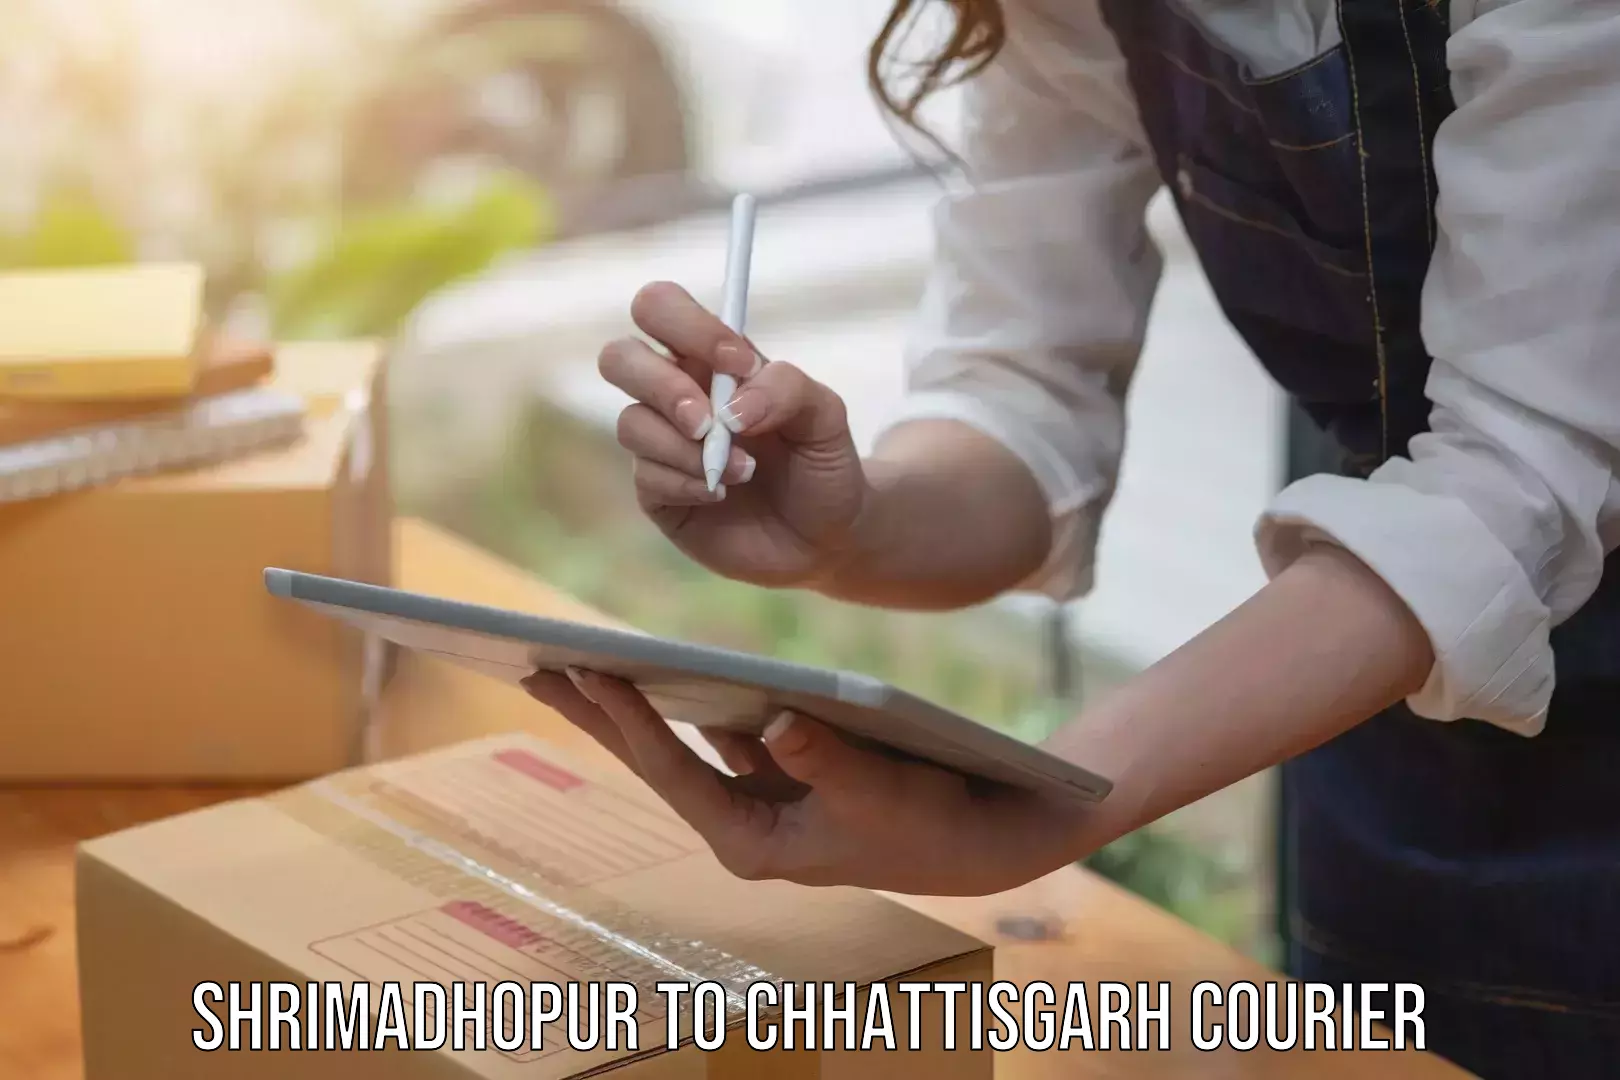 Courier service partnerships Shrimadhopur to Sakti